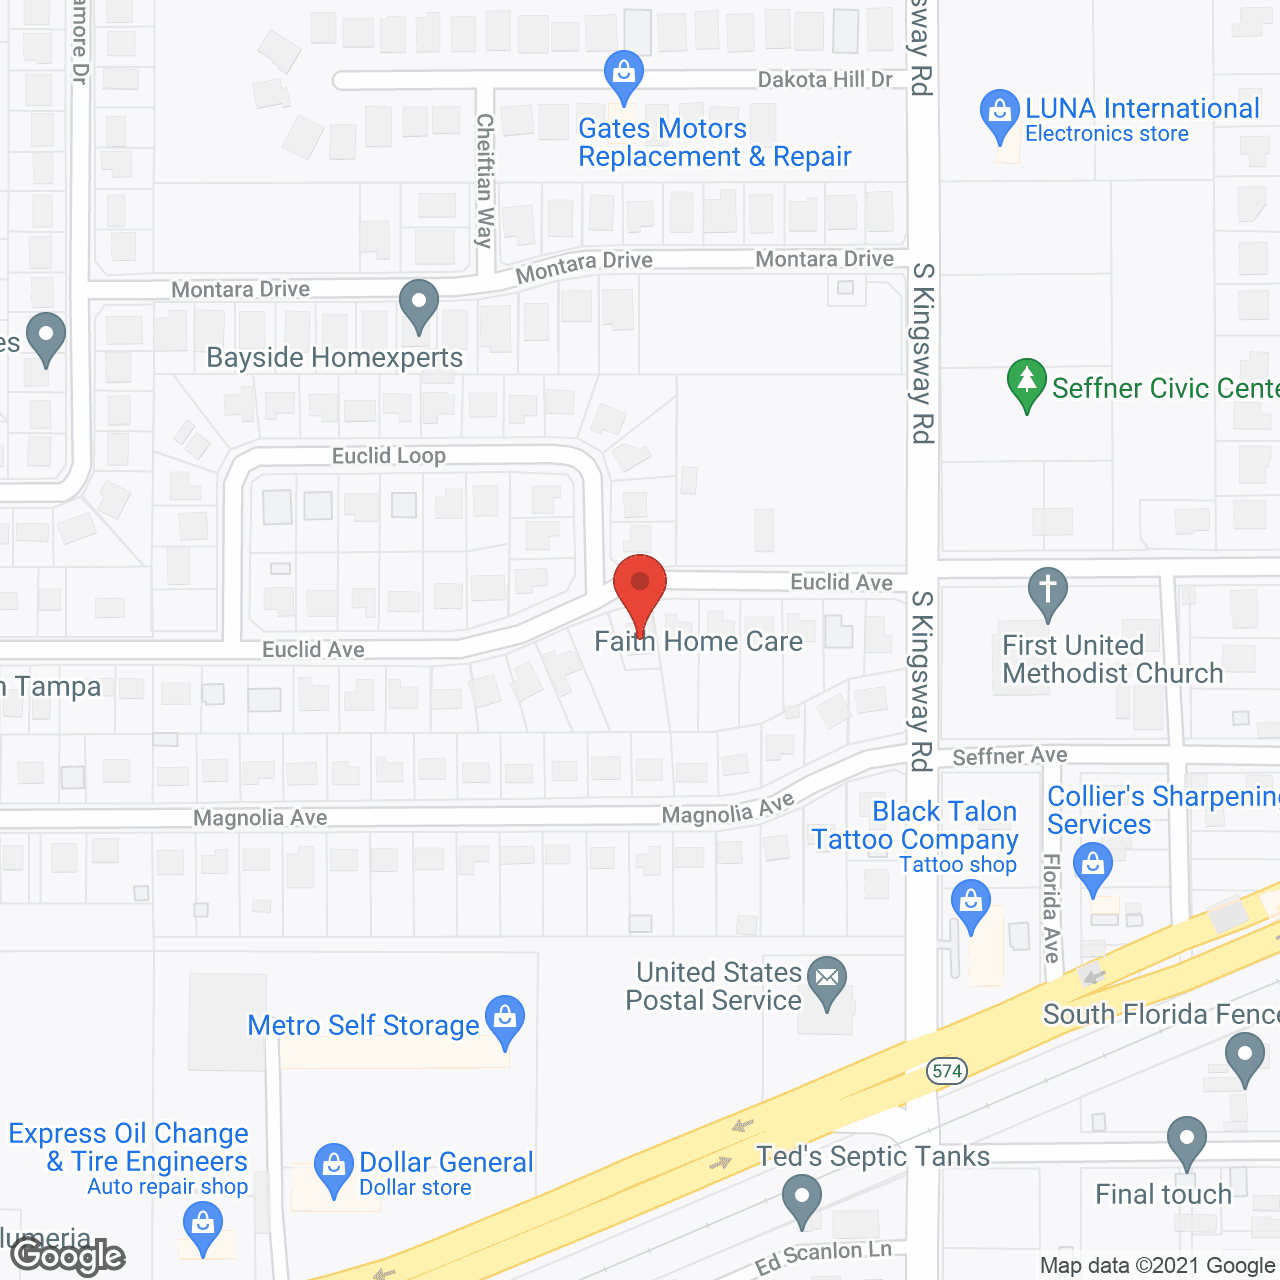 Faith Home Care in google map